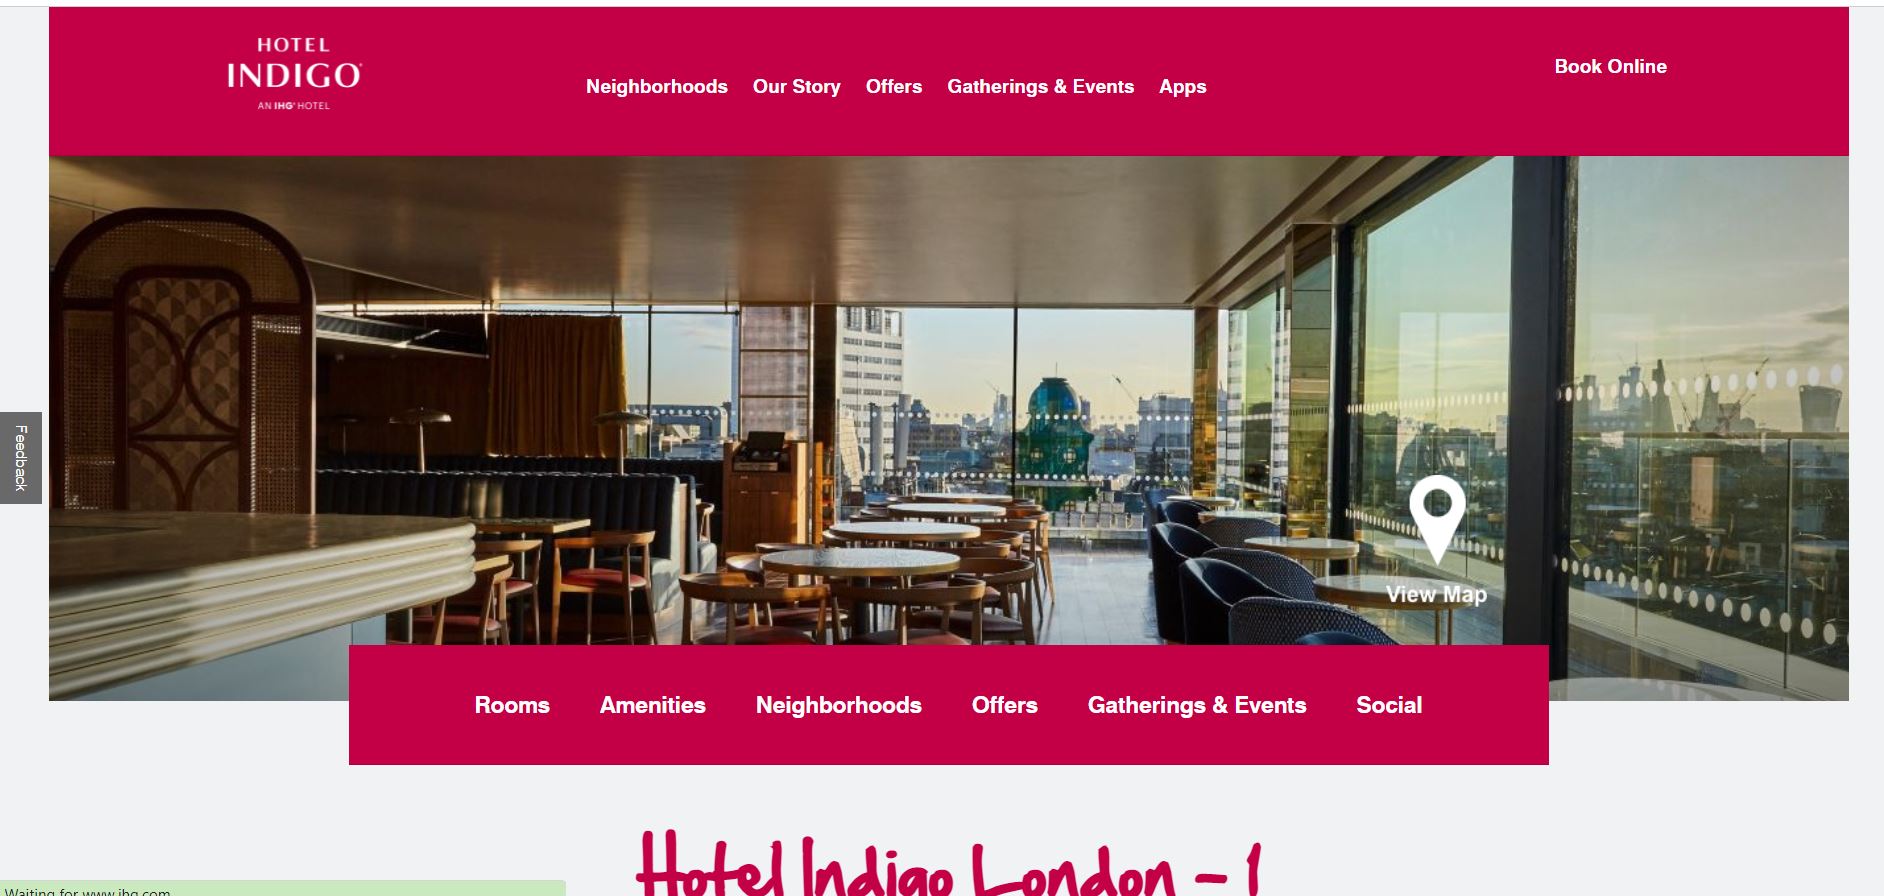 The Hotel Indigo London